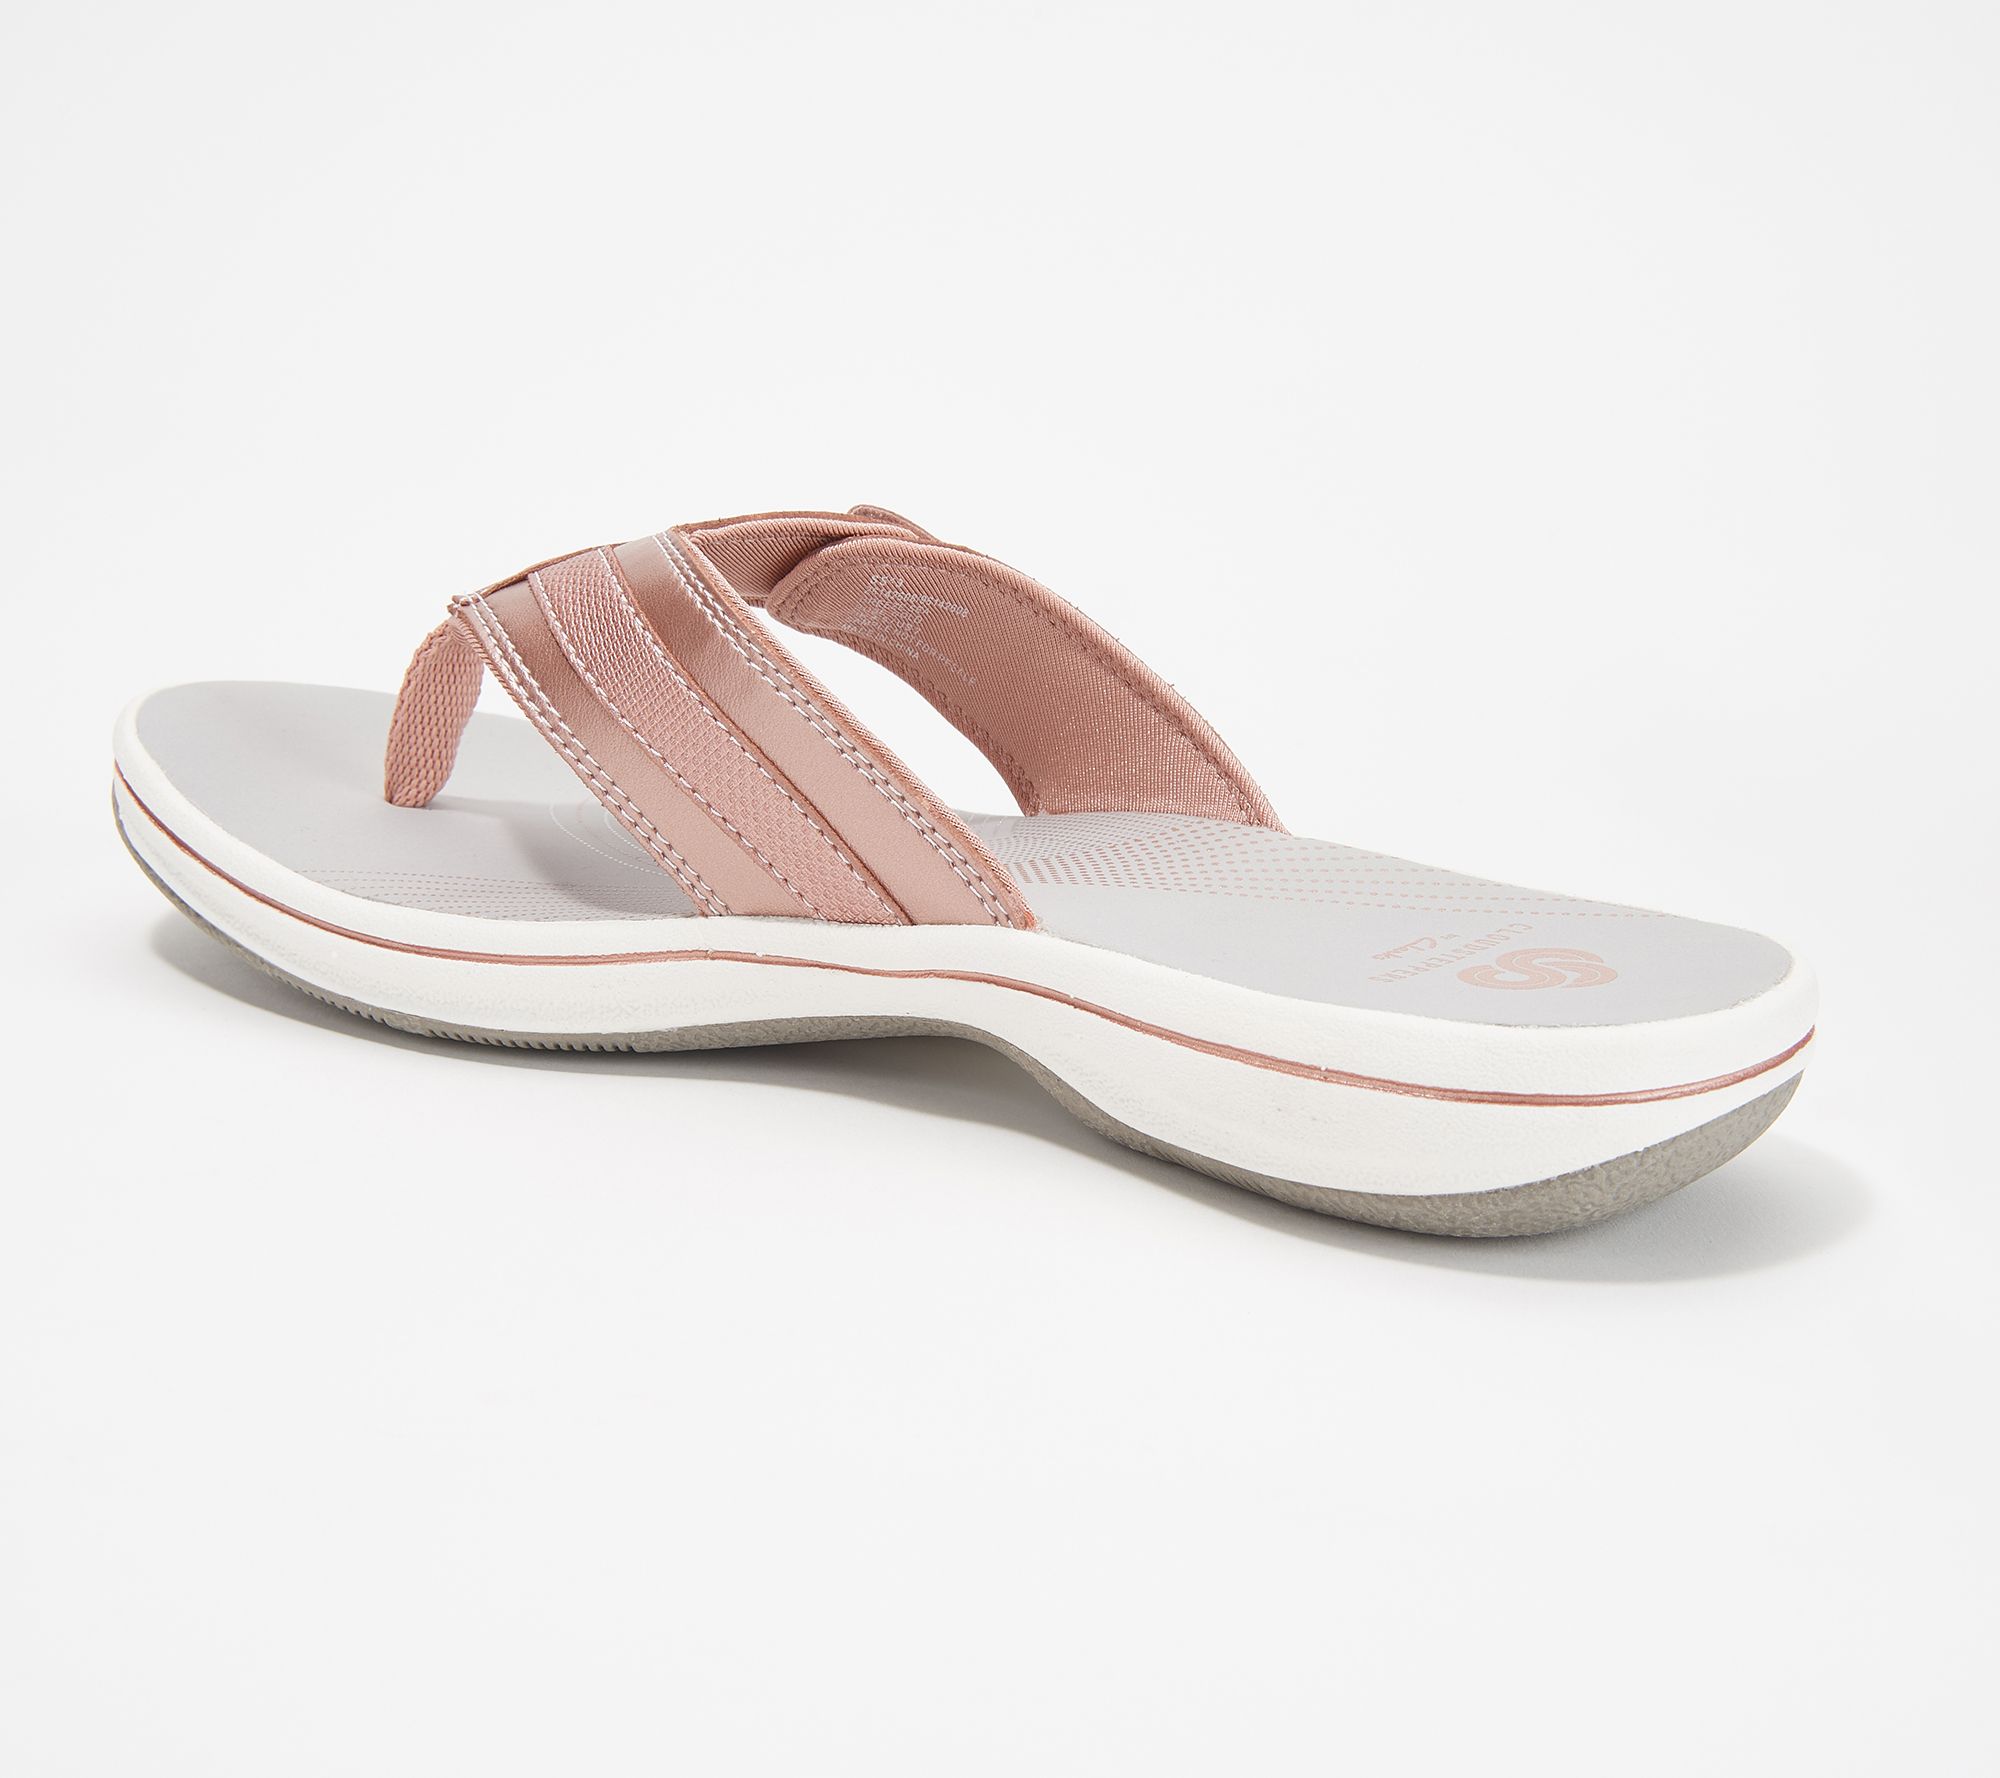 qvc clarks white sandals